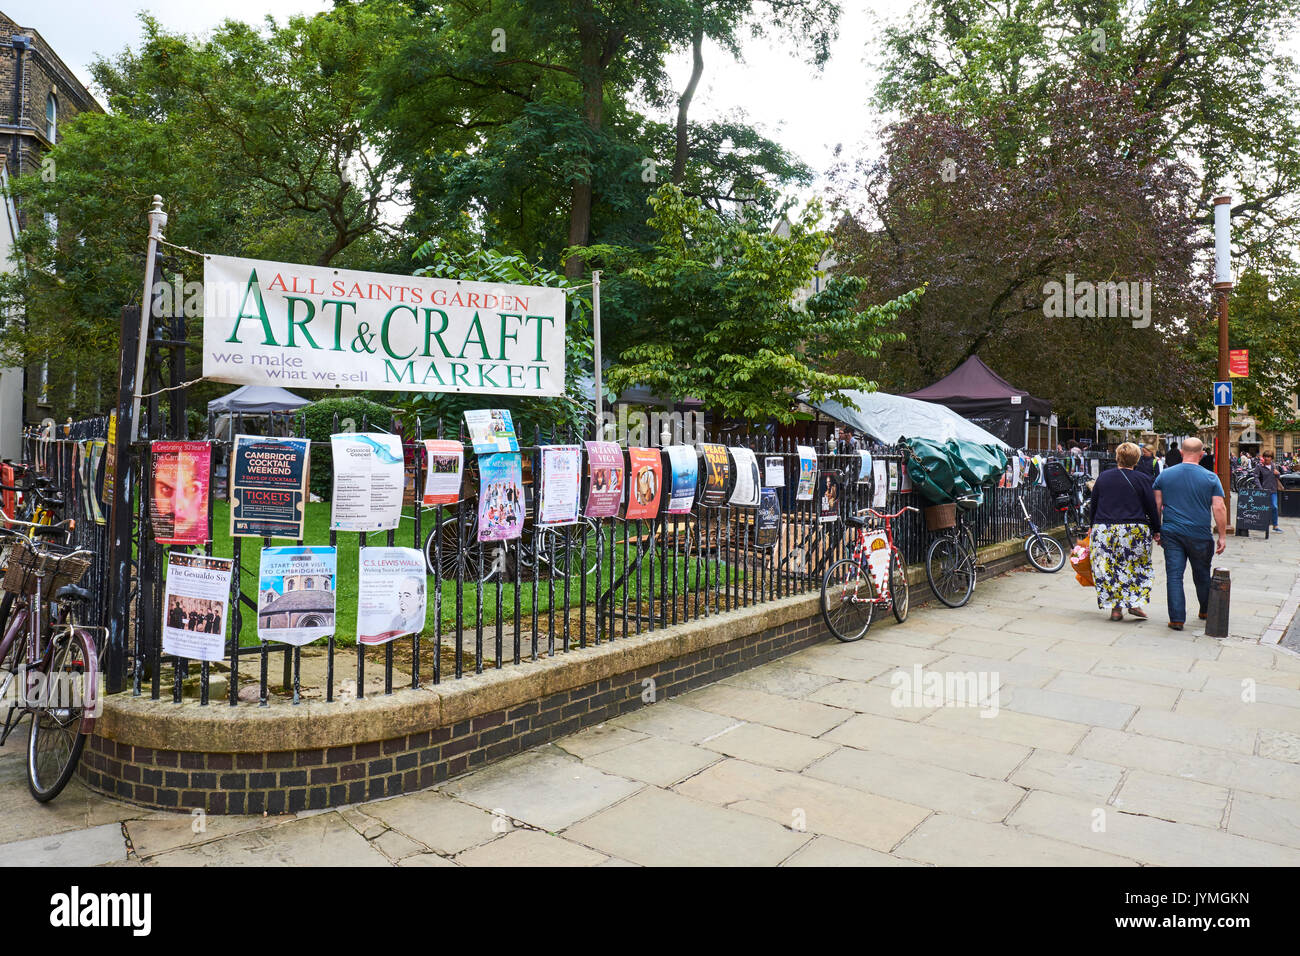 Art And Craft Market, All Saints Garden, Trinity Street, Cambridge, UK Stock Photo